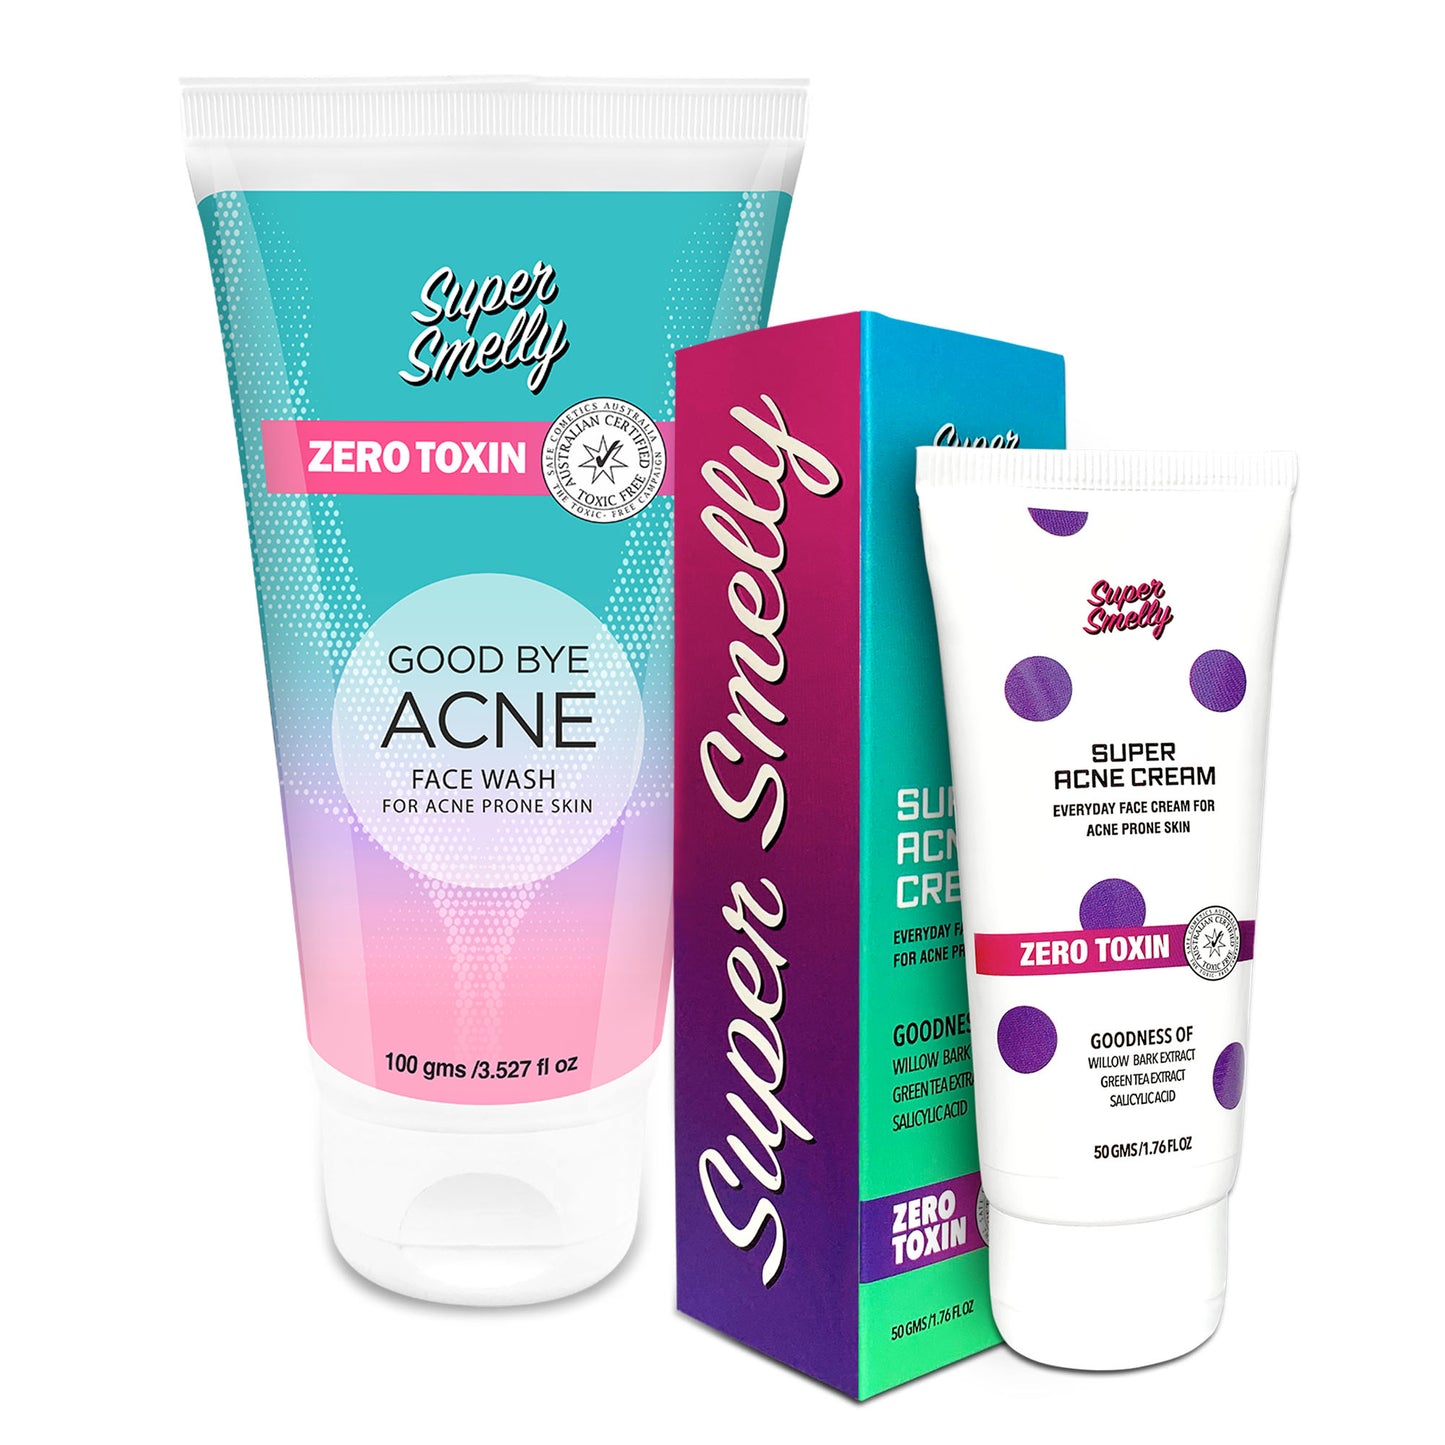 Goodbye Acne Face wash and Super Acne Cream Combo